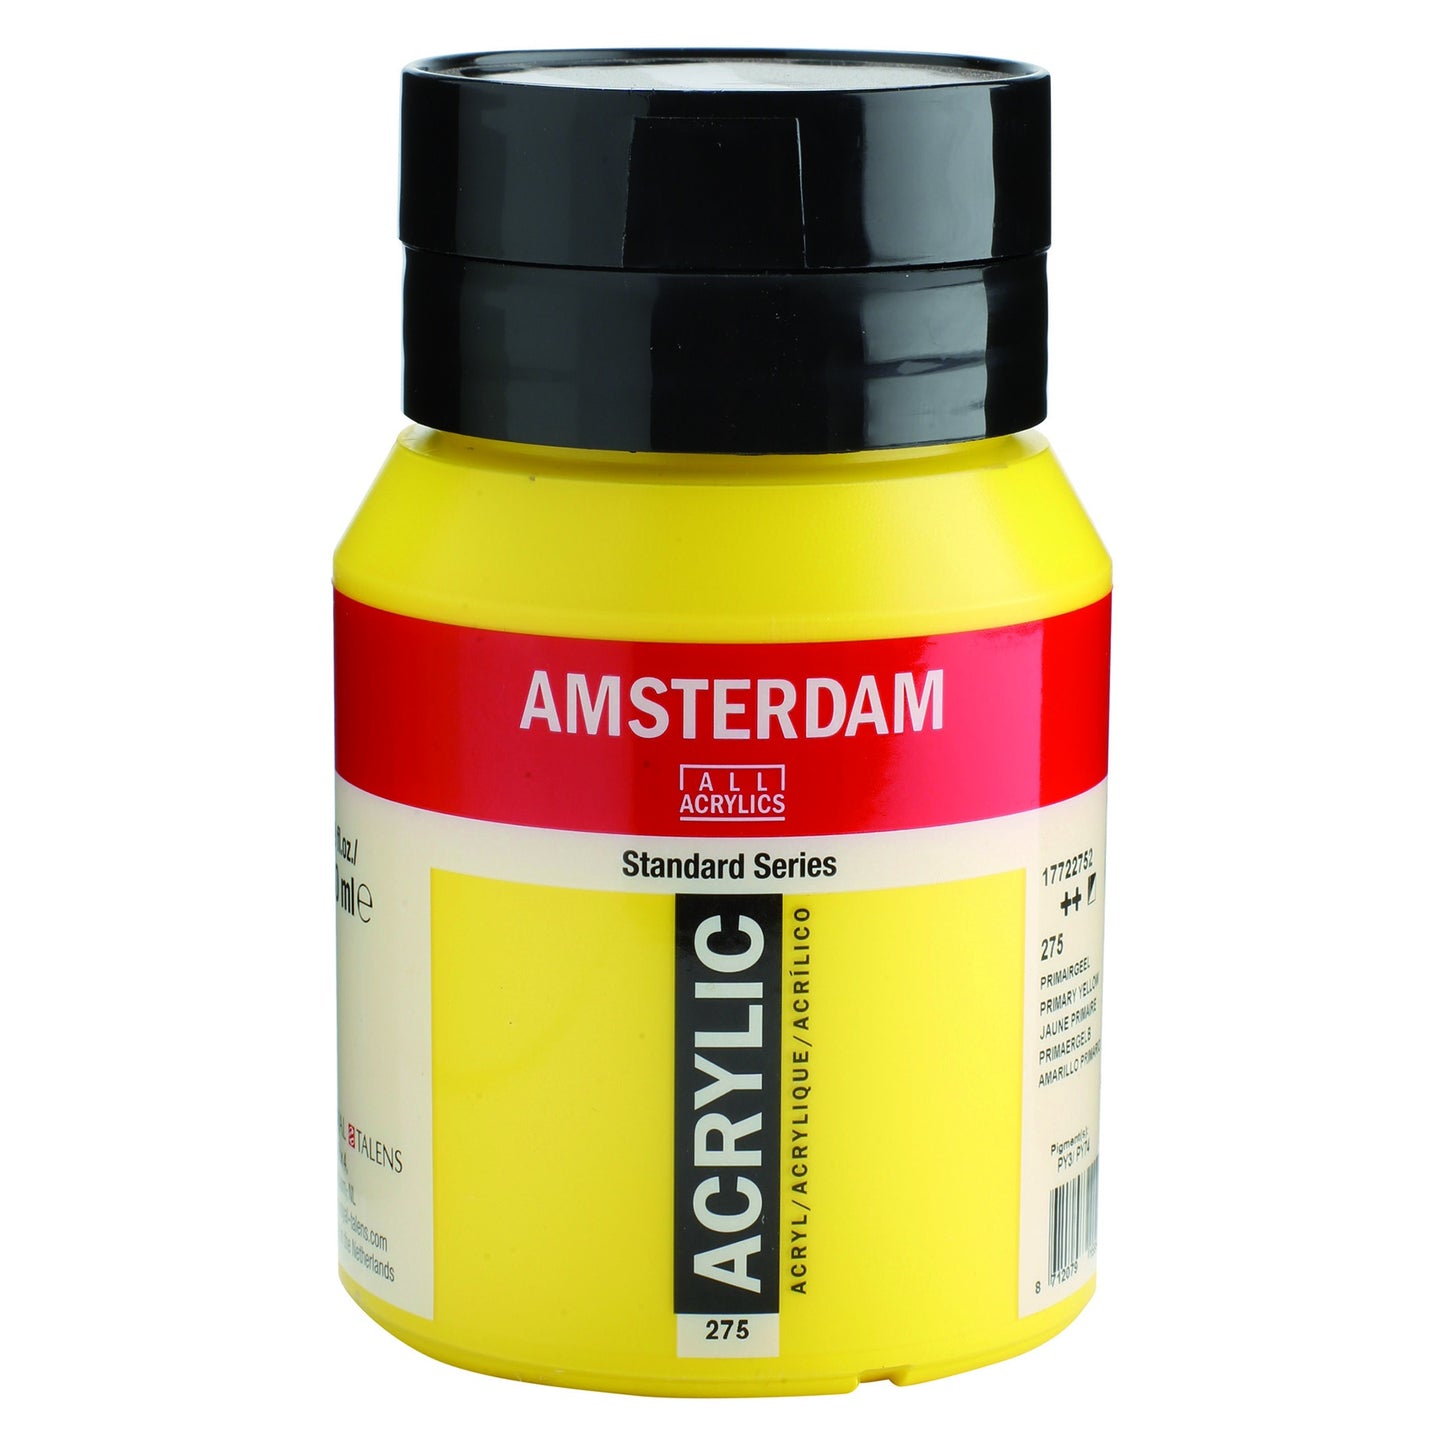 Amsterdam Standard Series Acrylics 500 ml Jars